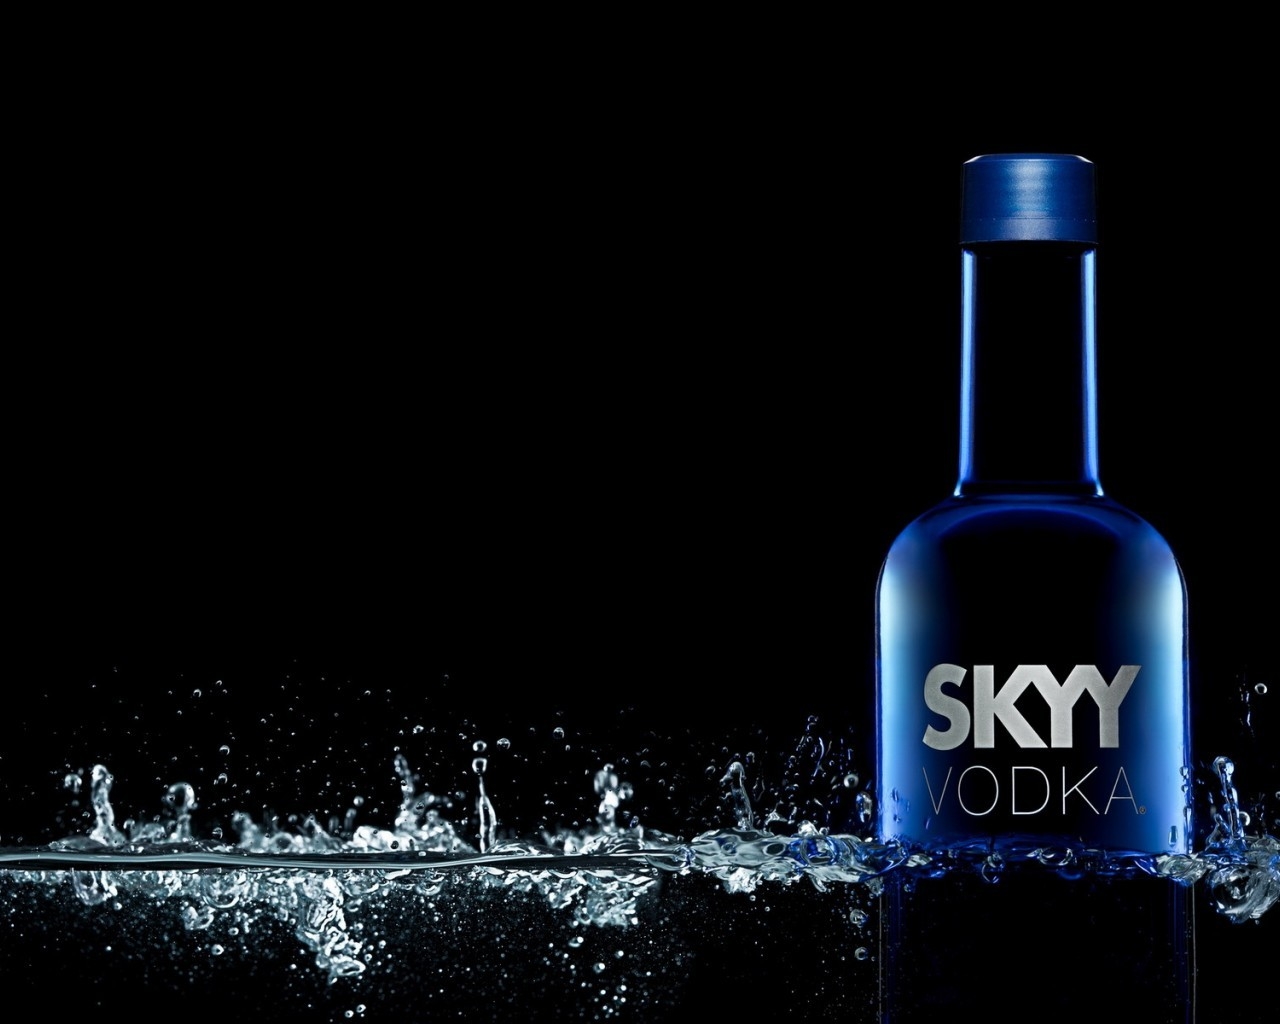 Skyy Vodka for 1280 x 1024 resolution